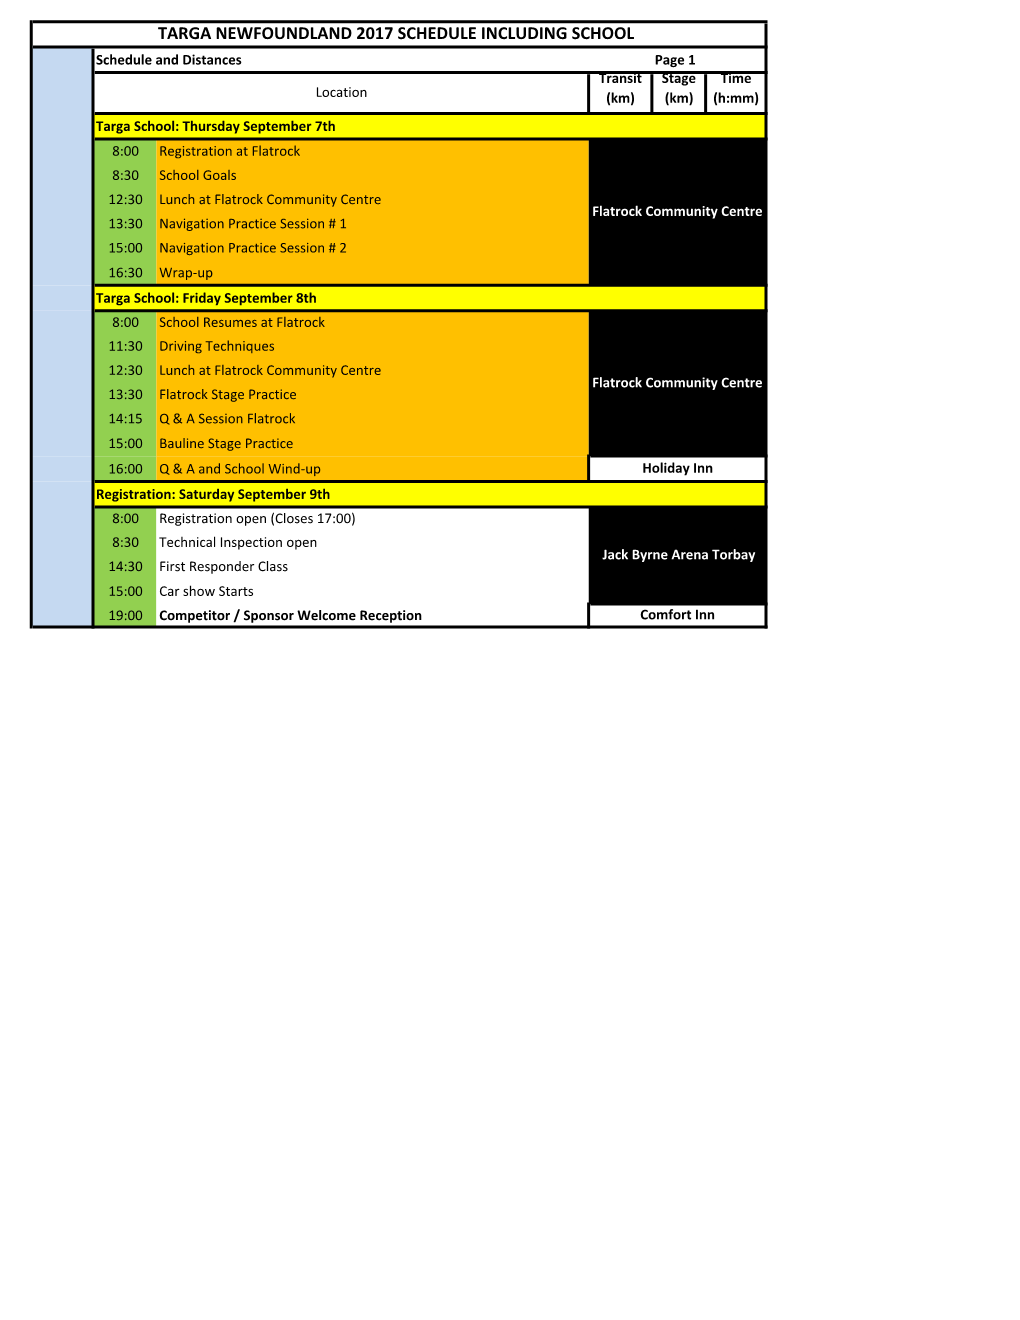 Targa Newfoundland 2017 Schedule Including School